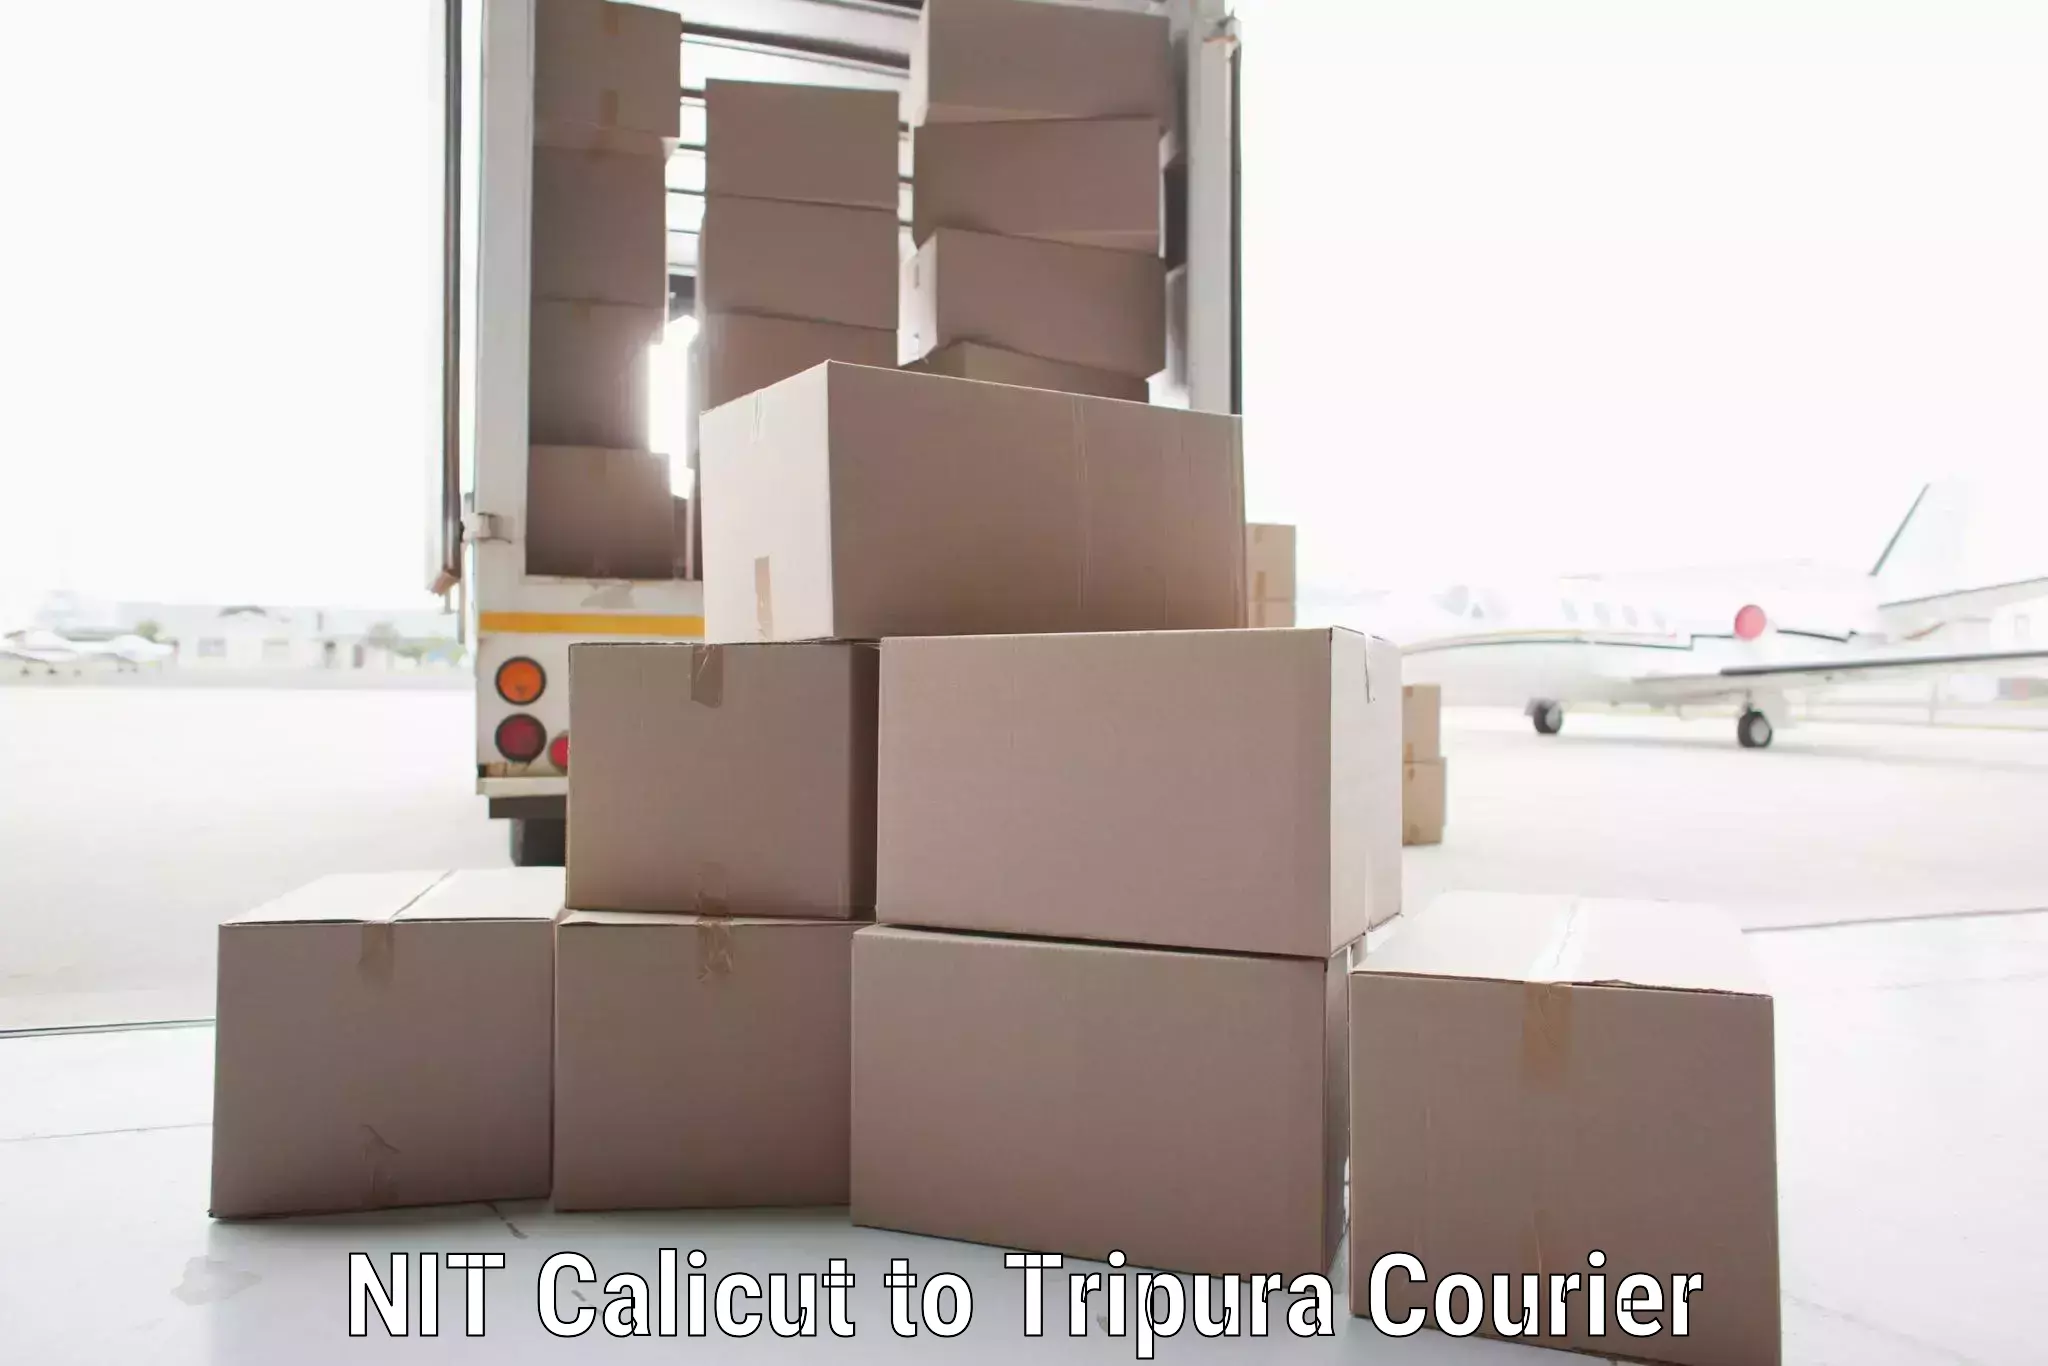 24/7 courier service NIT Calicut to Agartala